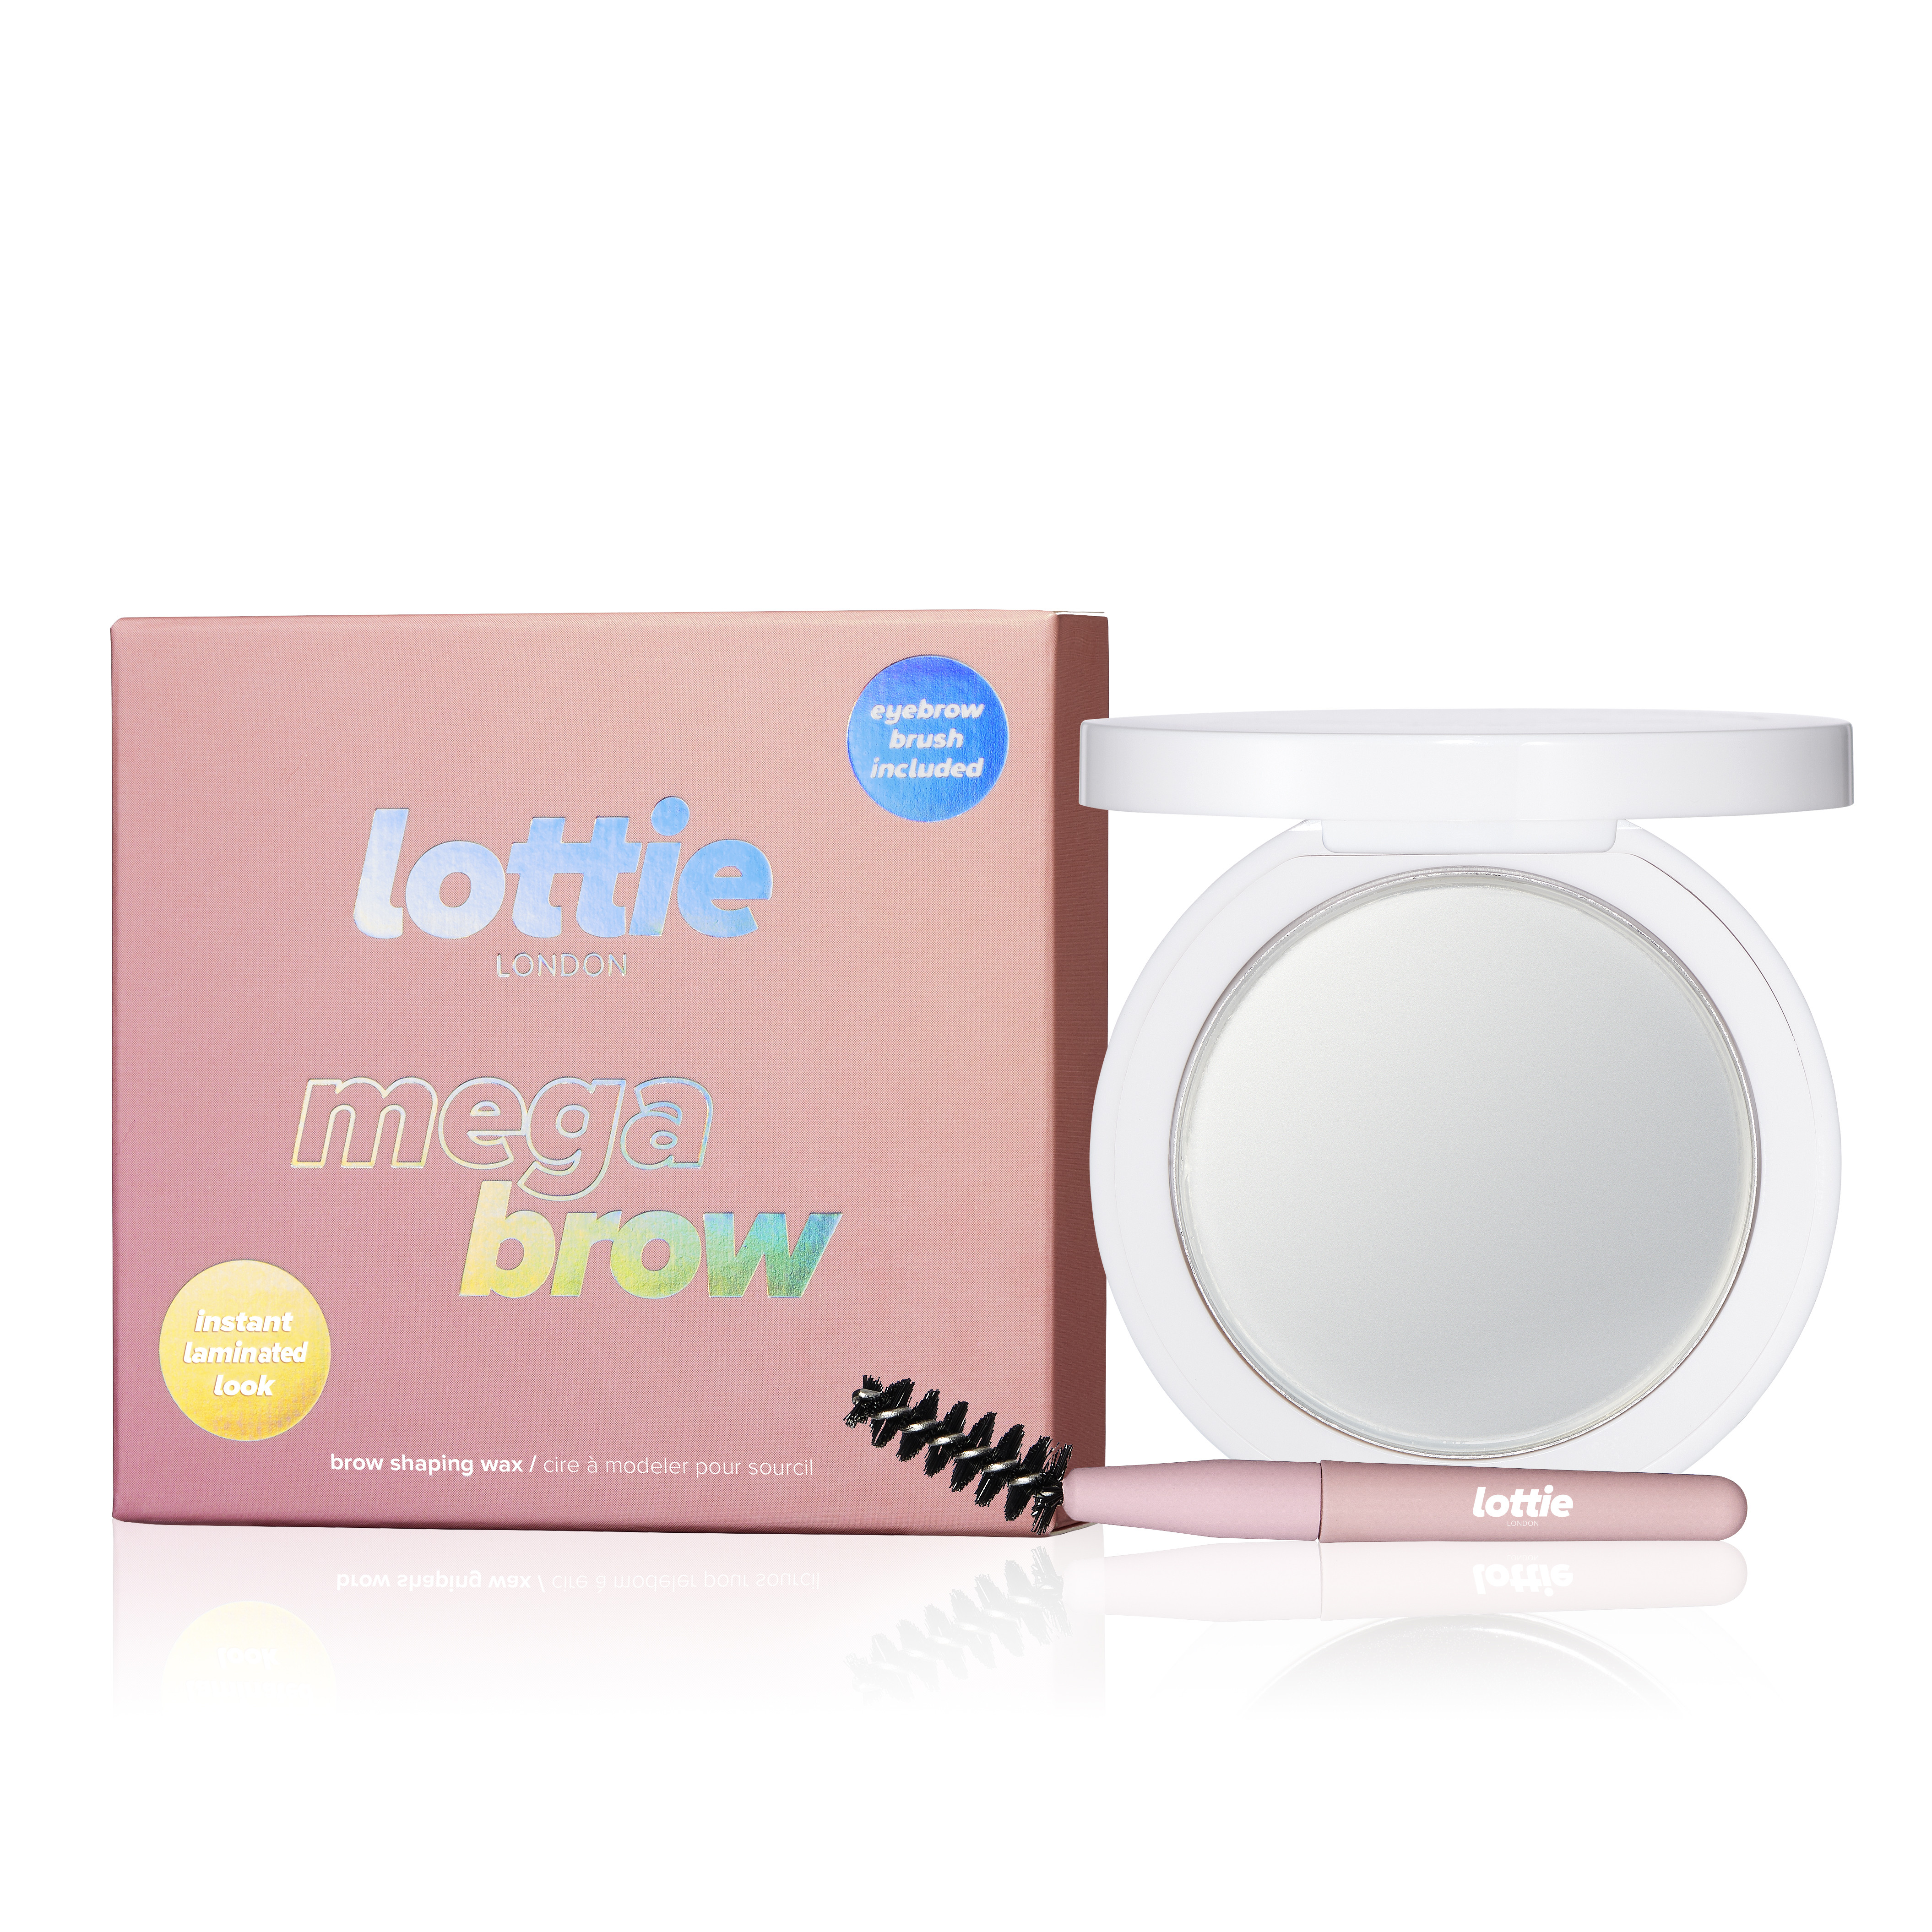 Lottie London Mega Brow Wax & Brush Set, Clear - image 1 of 9